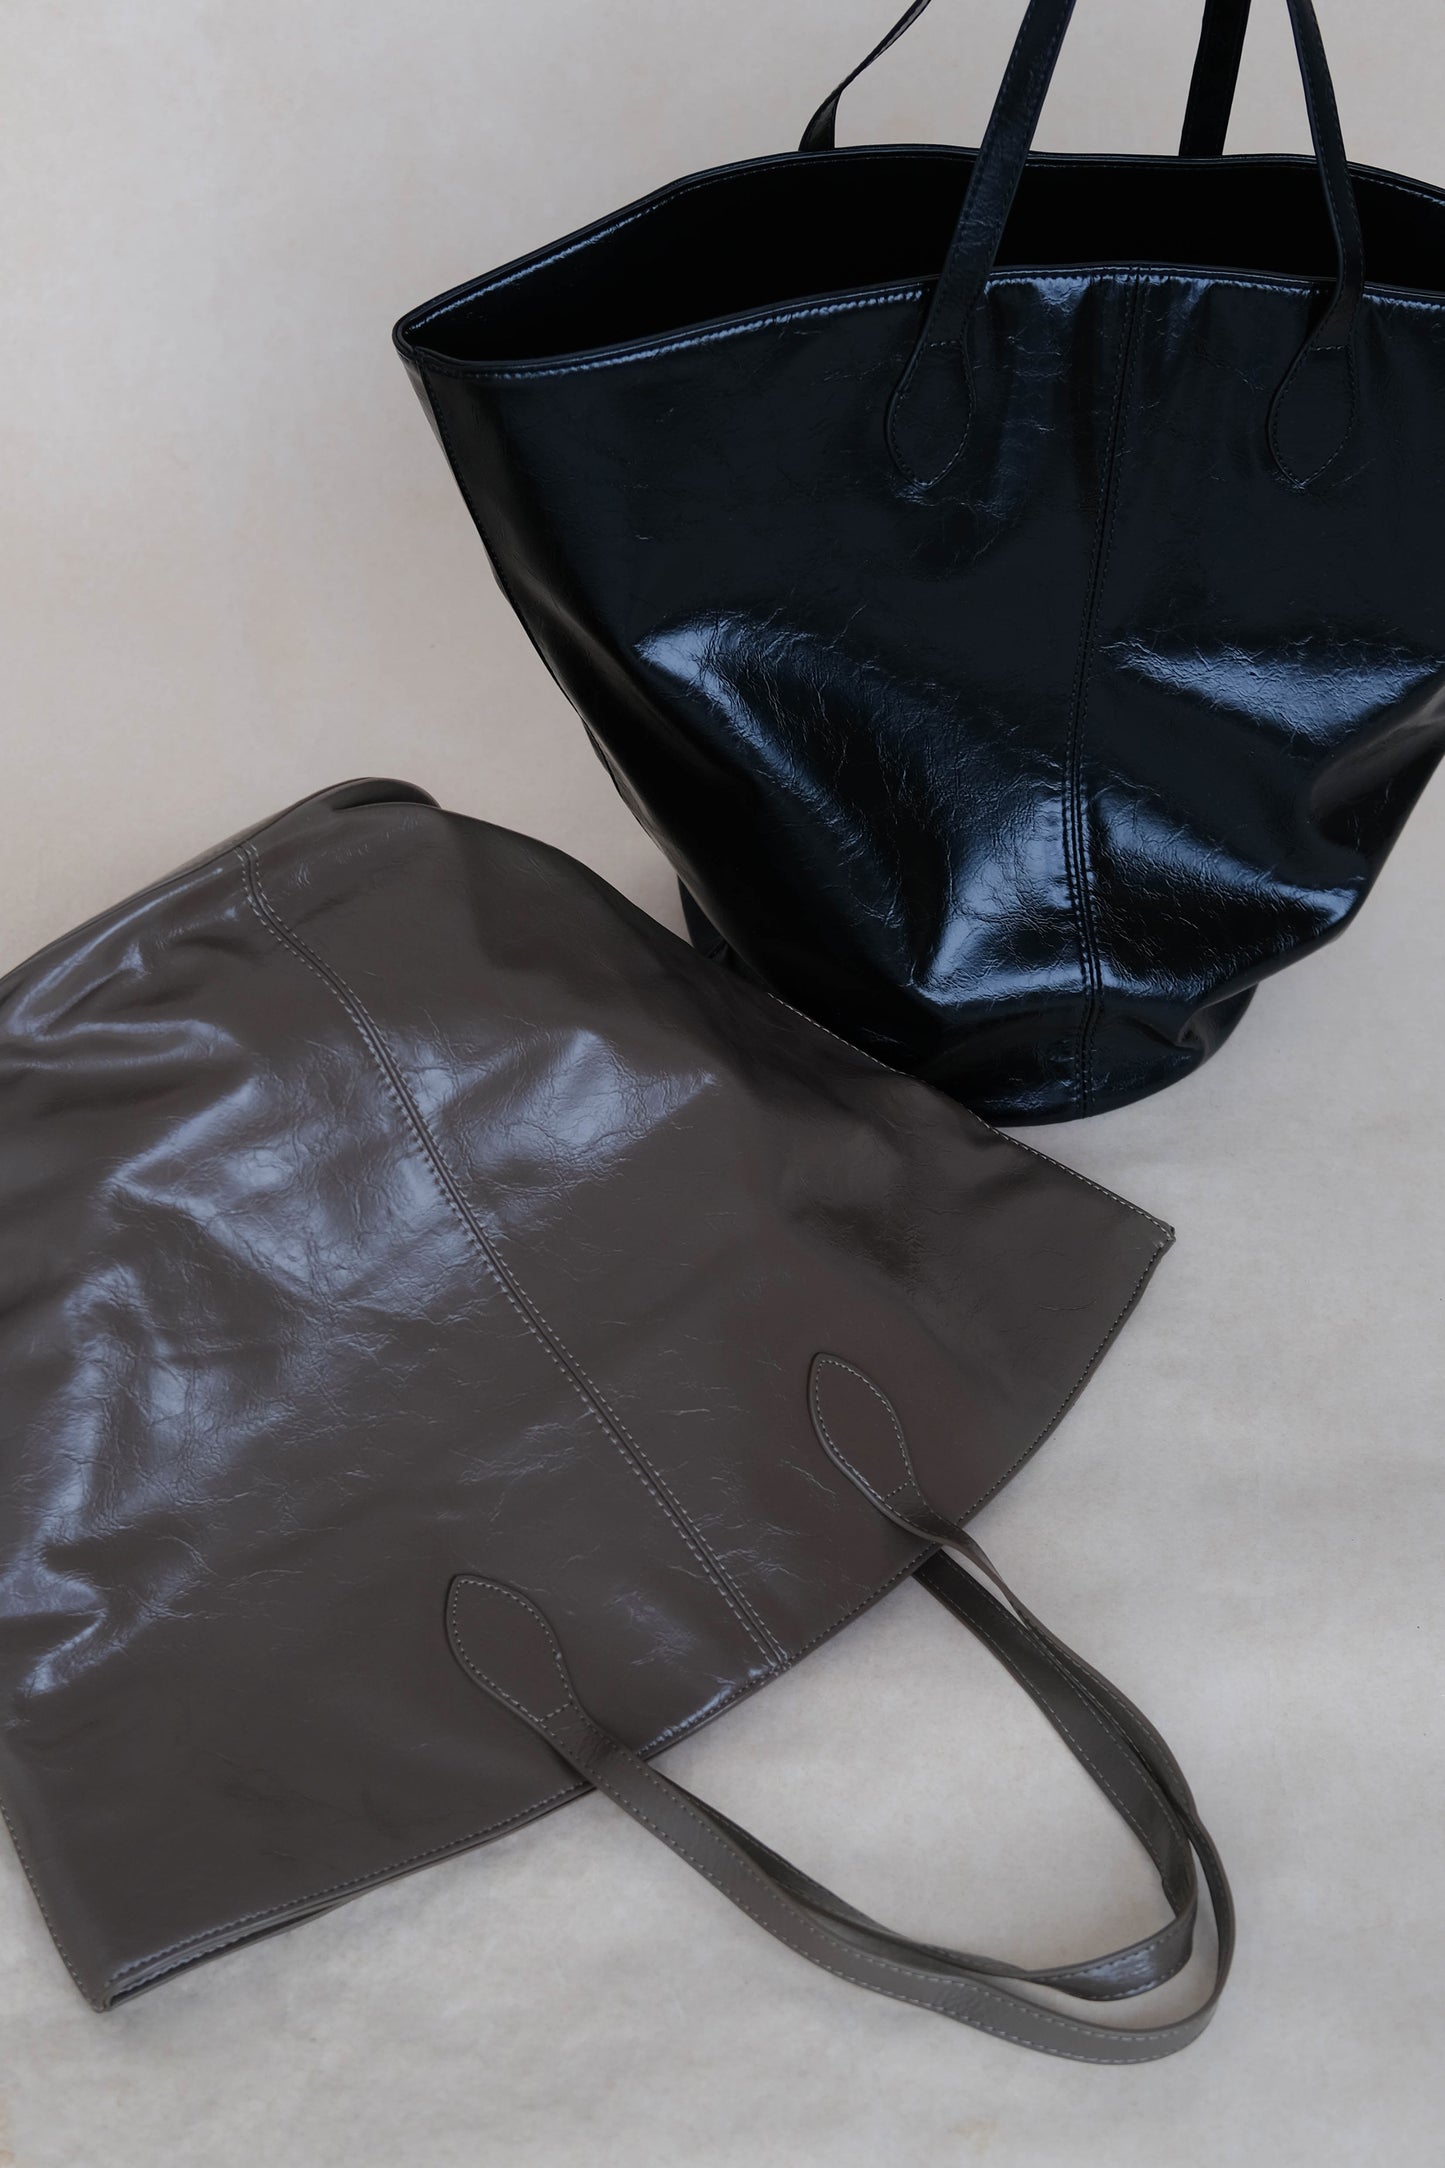 Bucket large capacity shoulder bag in classic black